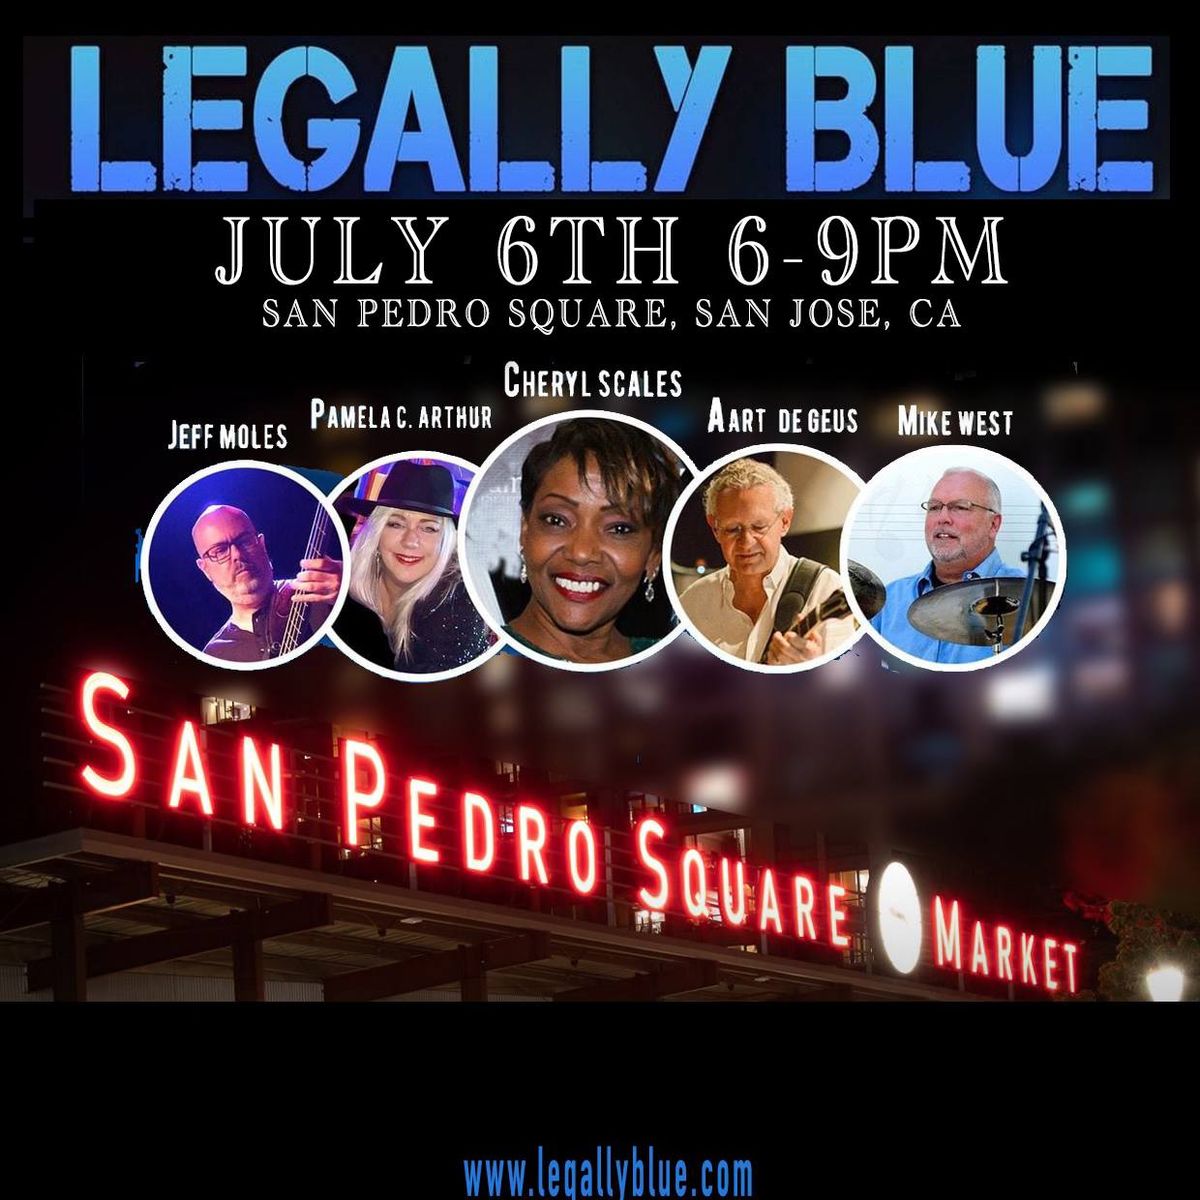 Legally Blue San Pedro Square July 6, 6-9pm